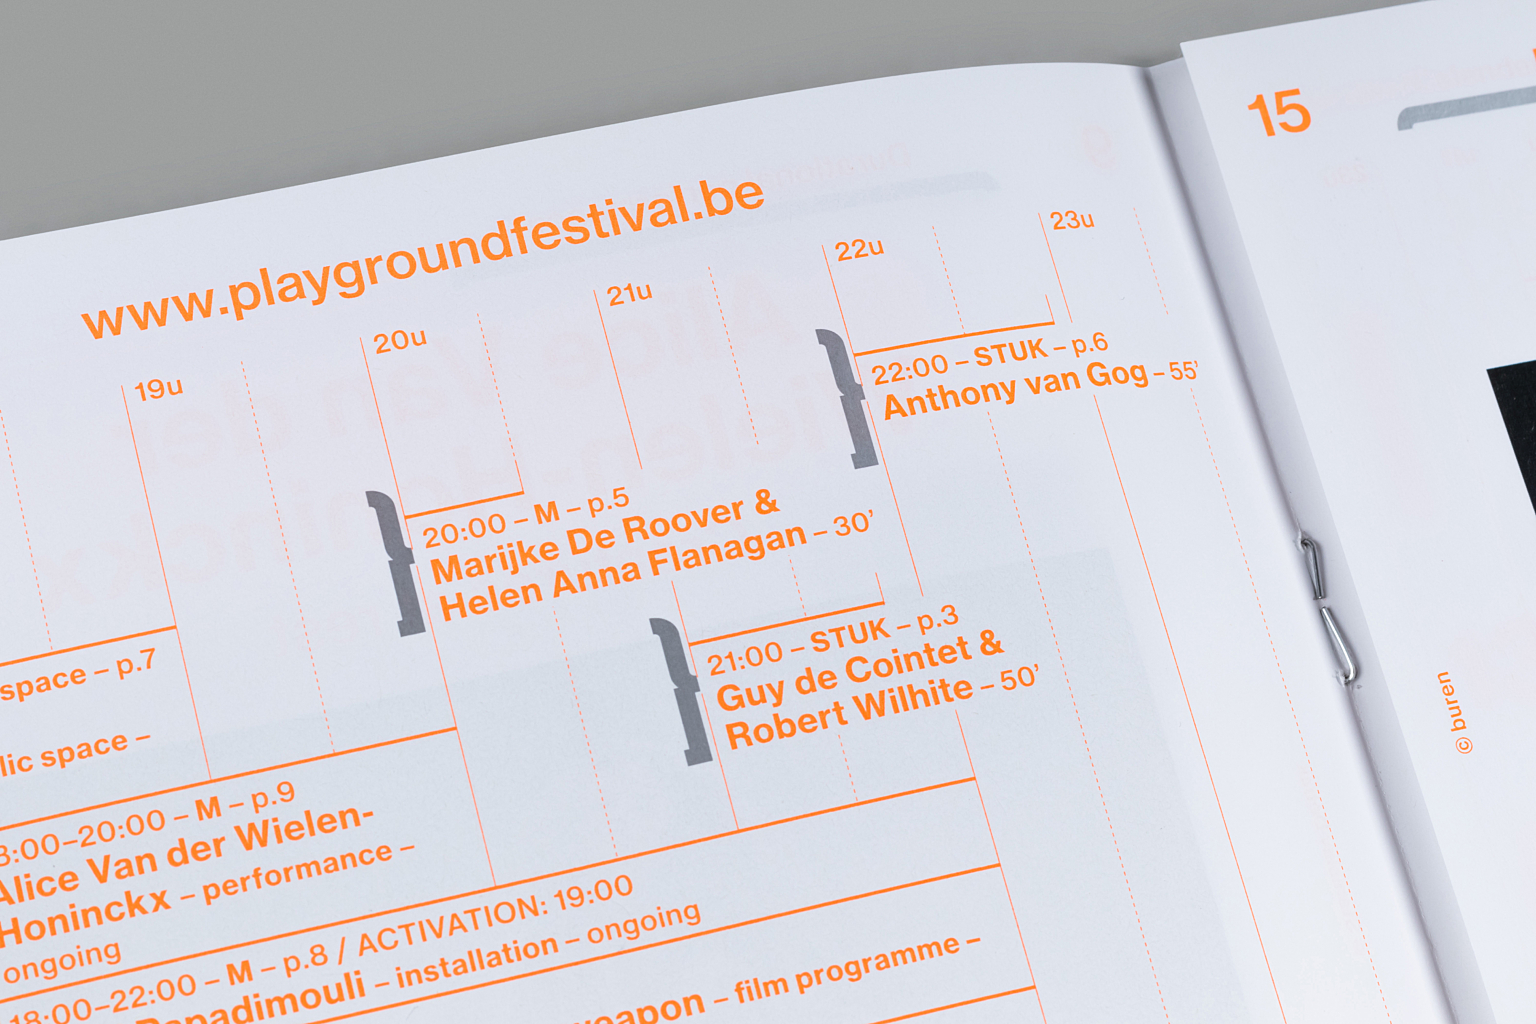 Playground festival brochure 2